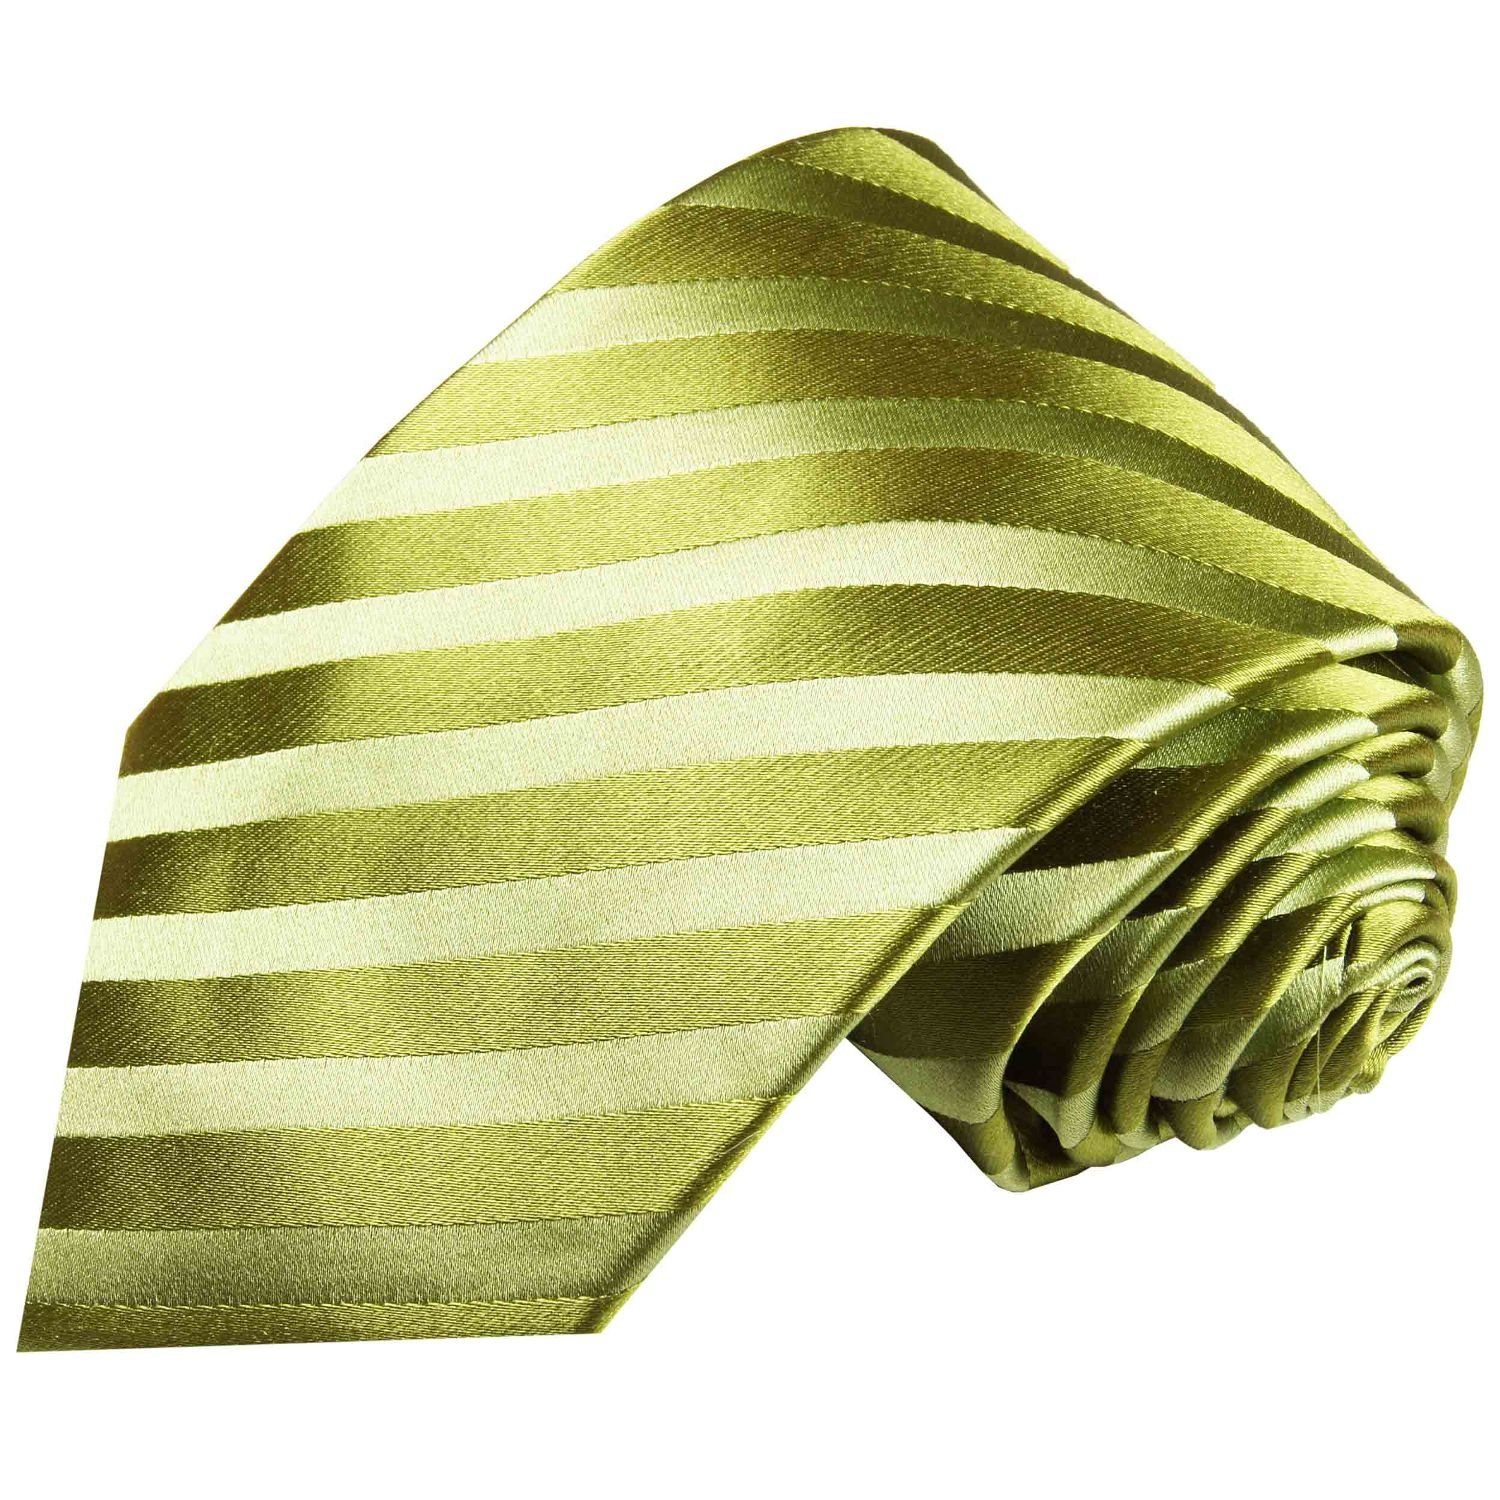 Paul Malone Krawatte grün 984 Schmal Seide 100% (6cm), Seidenkrawatte gestreift Herren Moderne